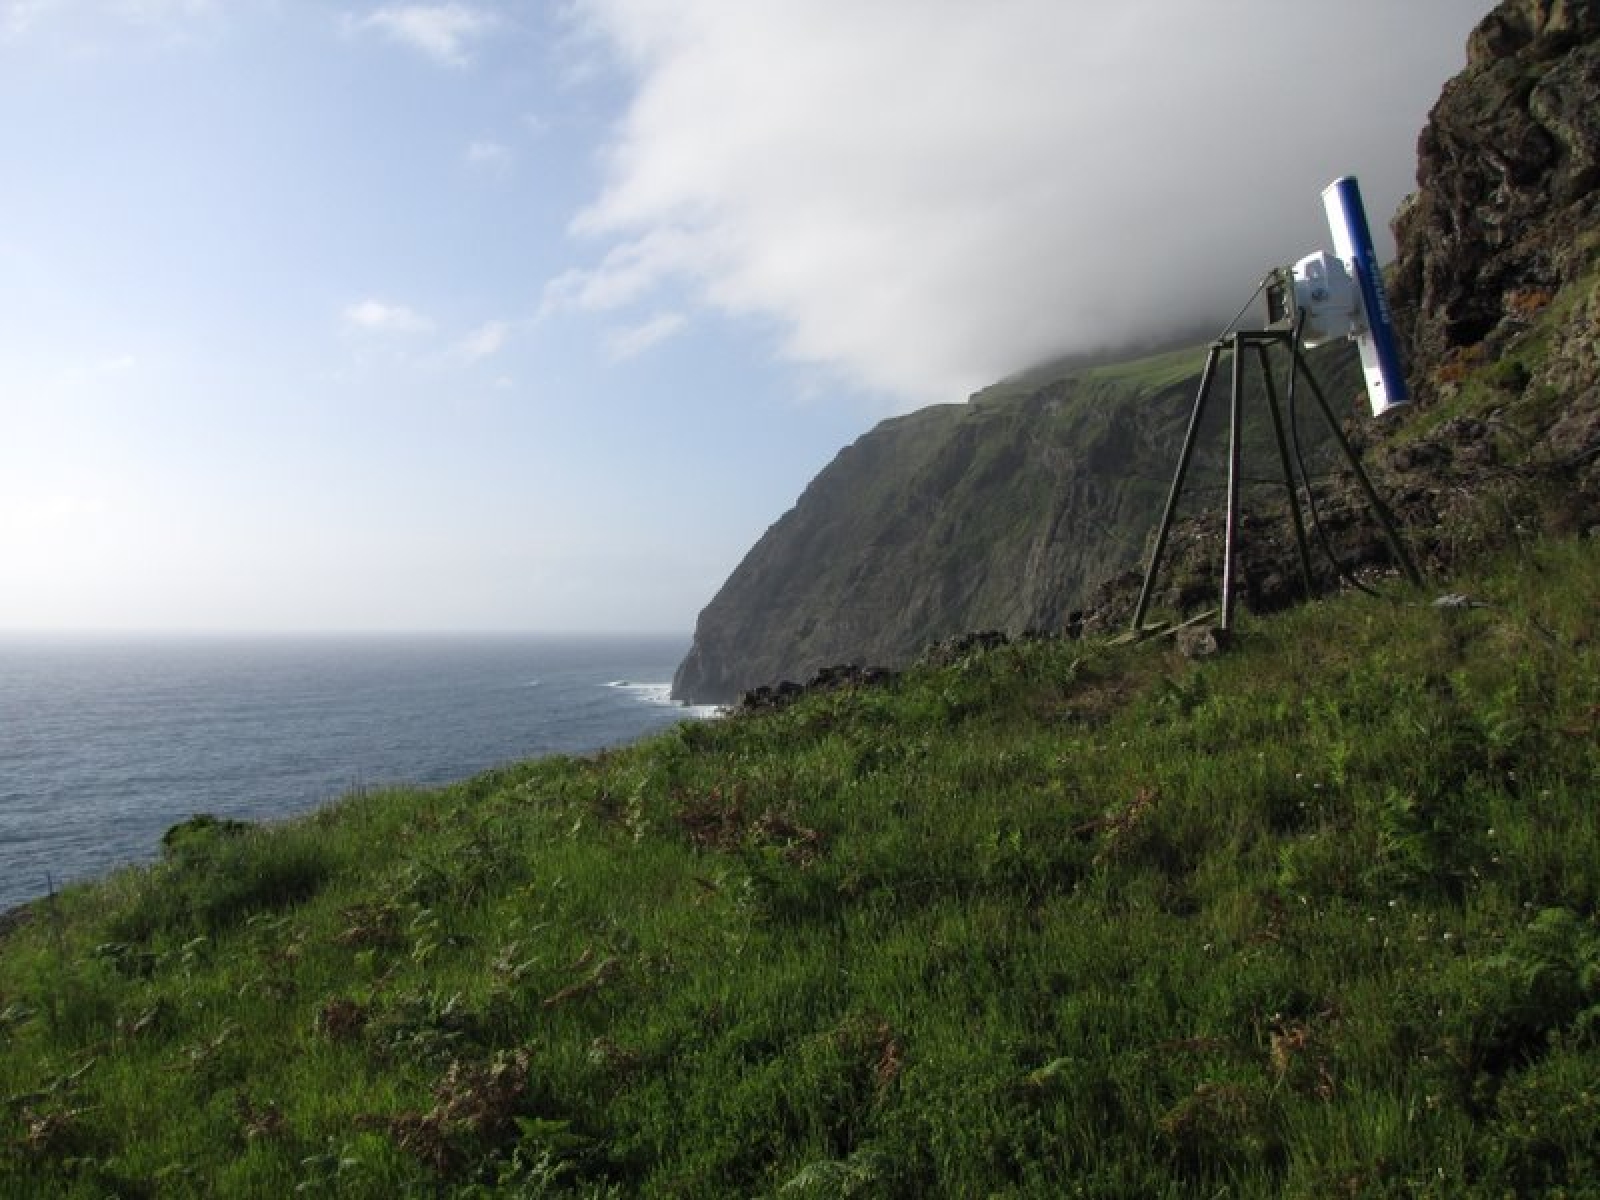 Radar Ornithology Study of Seabirds at Corvo Island